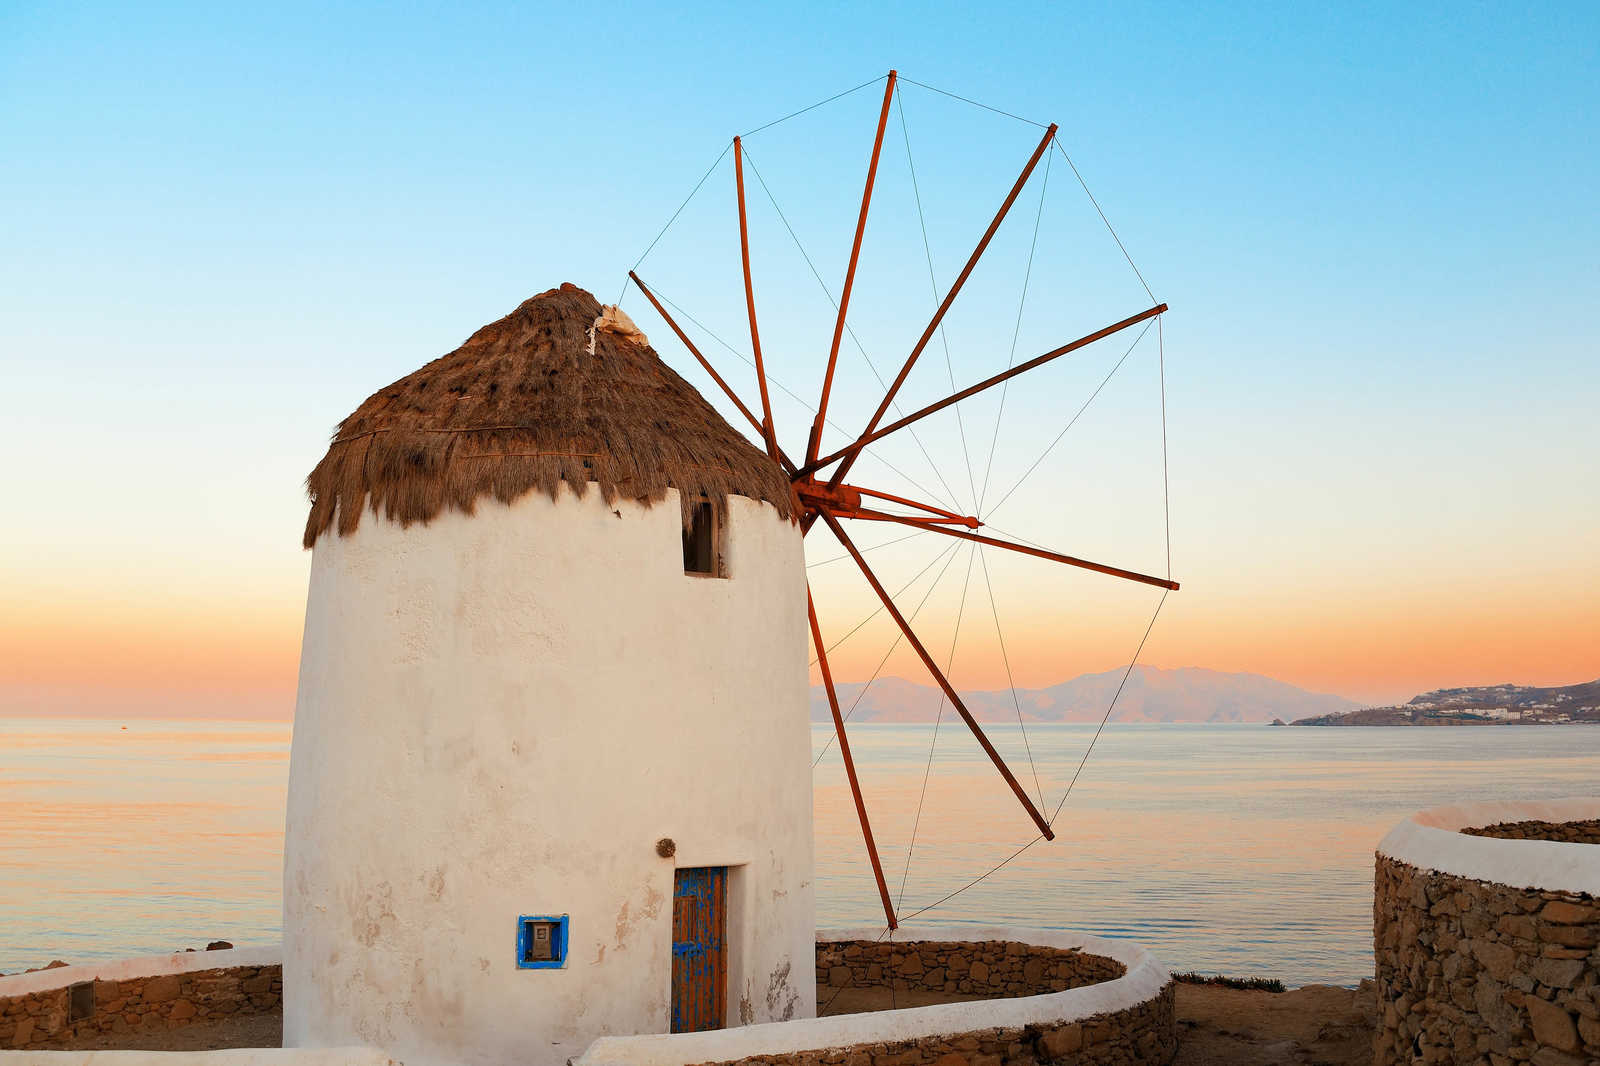             Canvas painting Greek windmill on the coast - 0,90 m x 0,60 m
        